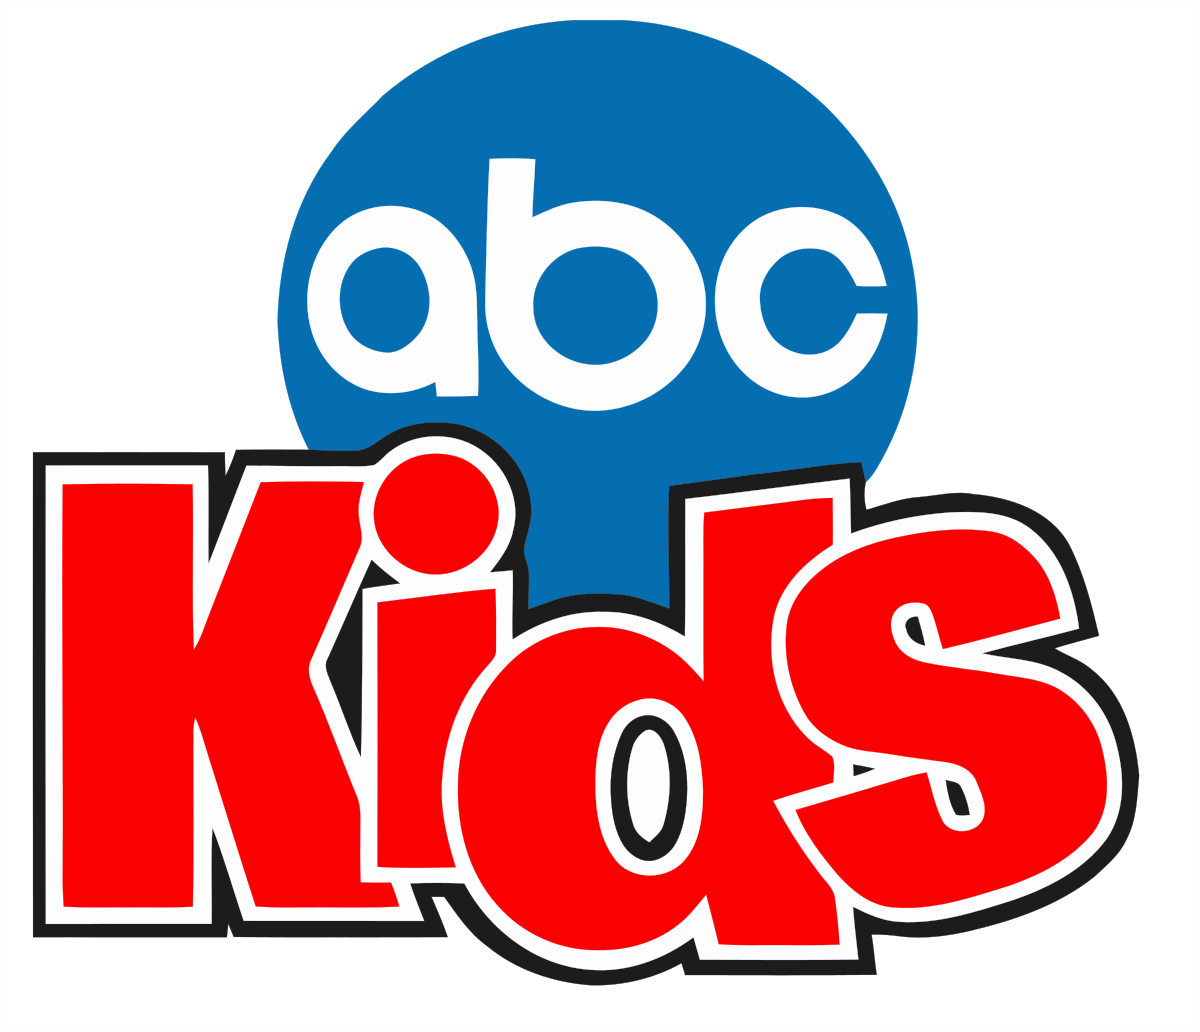 Current Disney Channel Logo - ABC Kids (TV programming block)